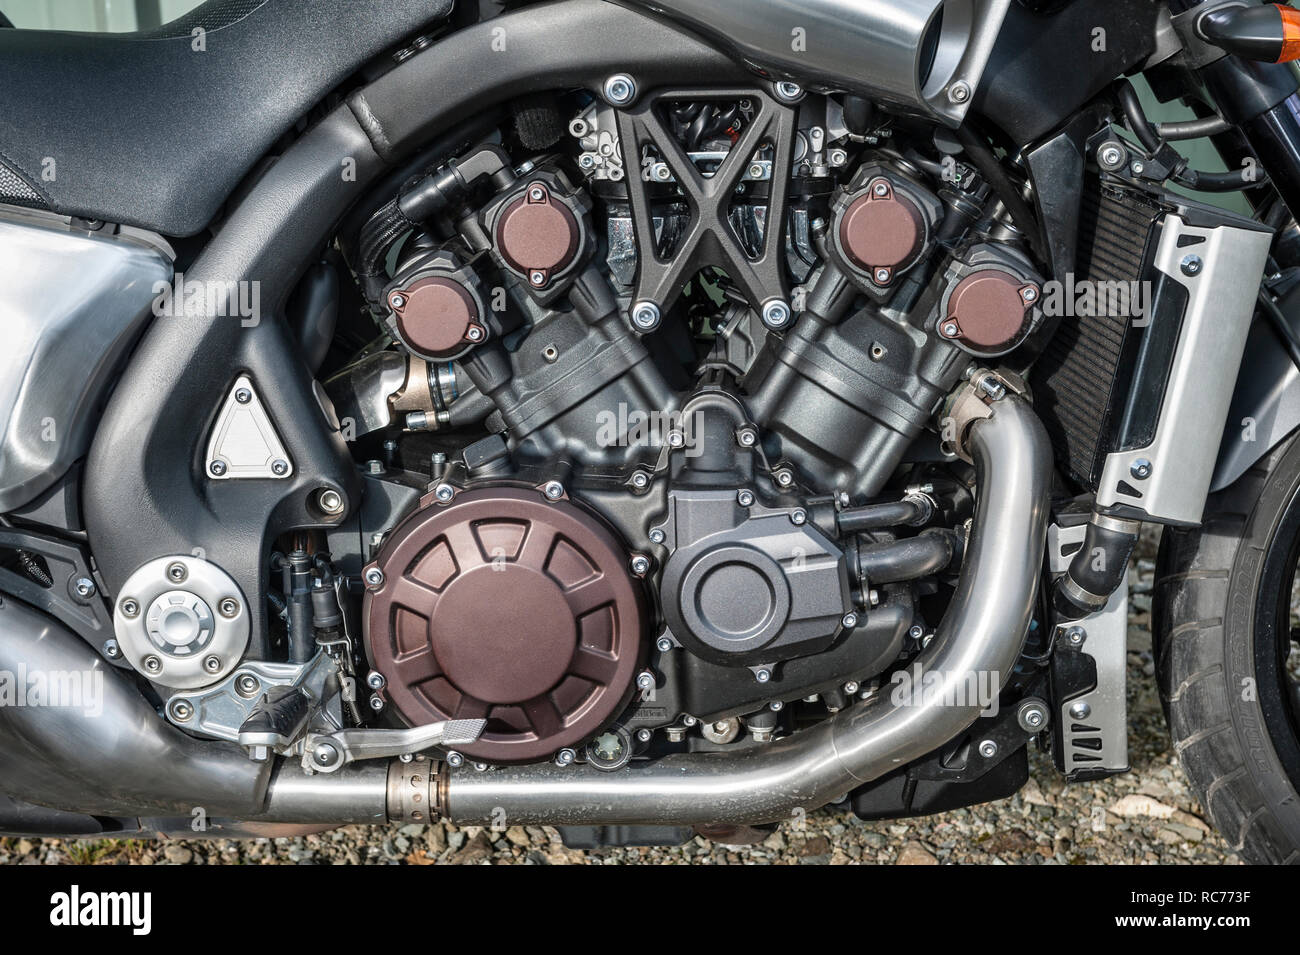 UK. Yamaha Vmax Motorrad, mit einem 4-Zylinder luftgekühlt 1679-cm³-V4-Motor,  Nahaufnahme Stockfotografie - Alamy